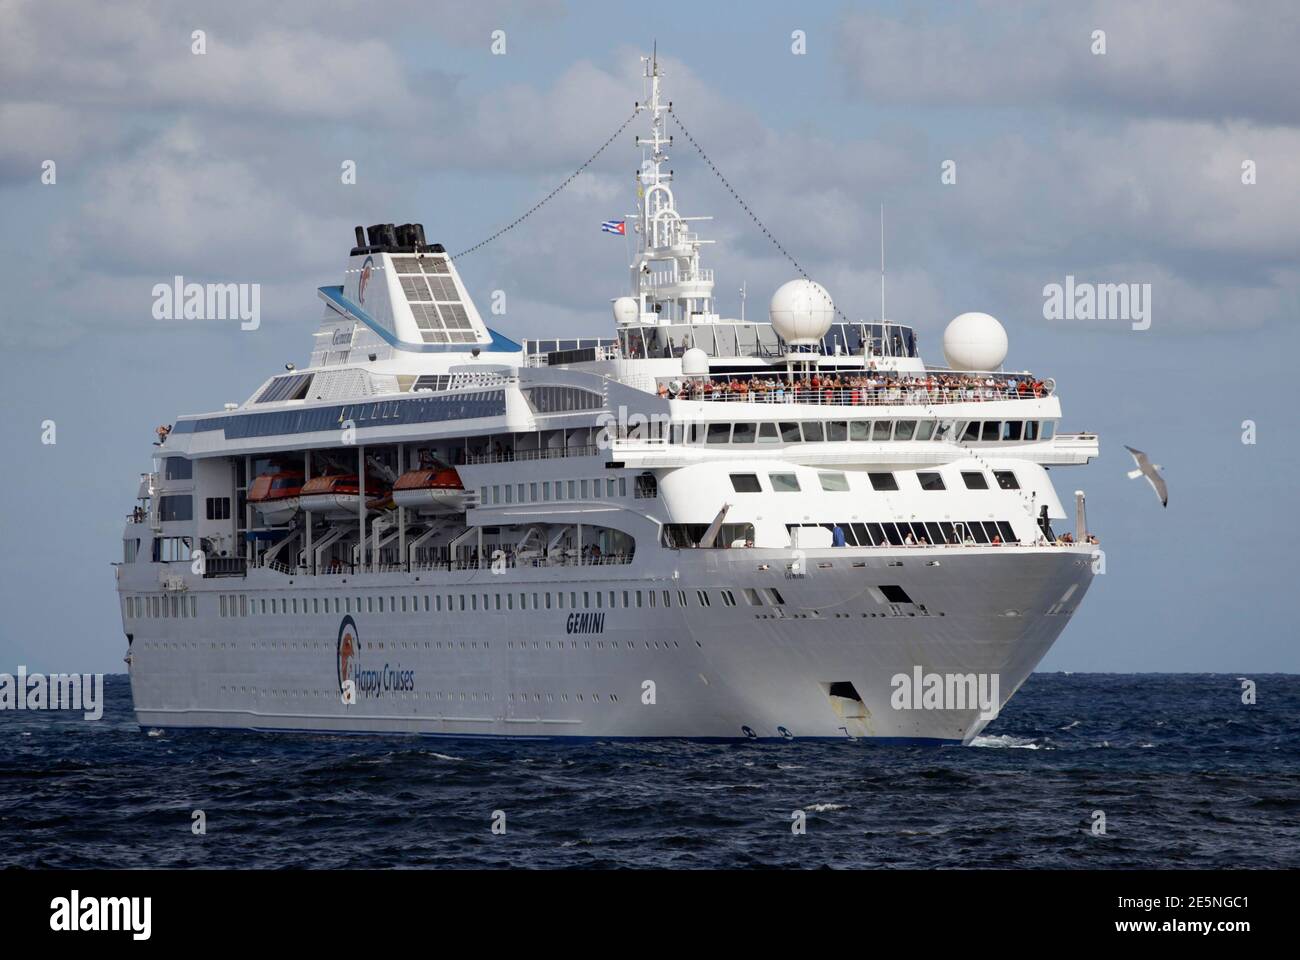 Spanish cruise ship 'Gemini' arrives at Havana Harbor November 12, 2010. Spanish company Happy Cruises will home-port its 'Gemini' ship in Havana and will offer around-Cuba cruises.  REUTERS/Desmond Boylan (CUBA - Tags: SOCIETY TRAVEL BUSINESS) Stock Photo